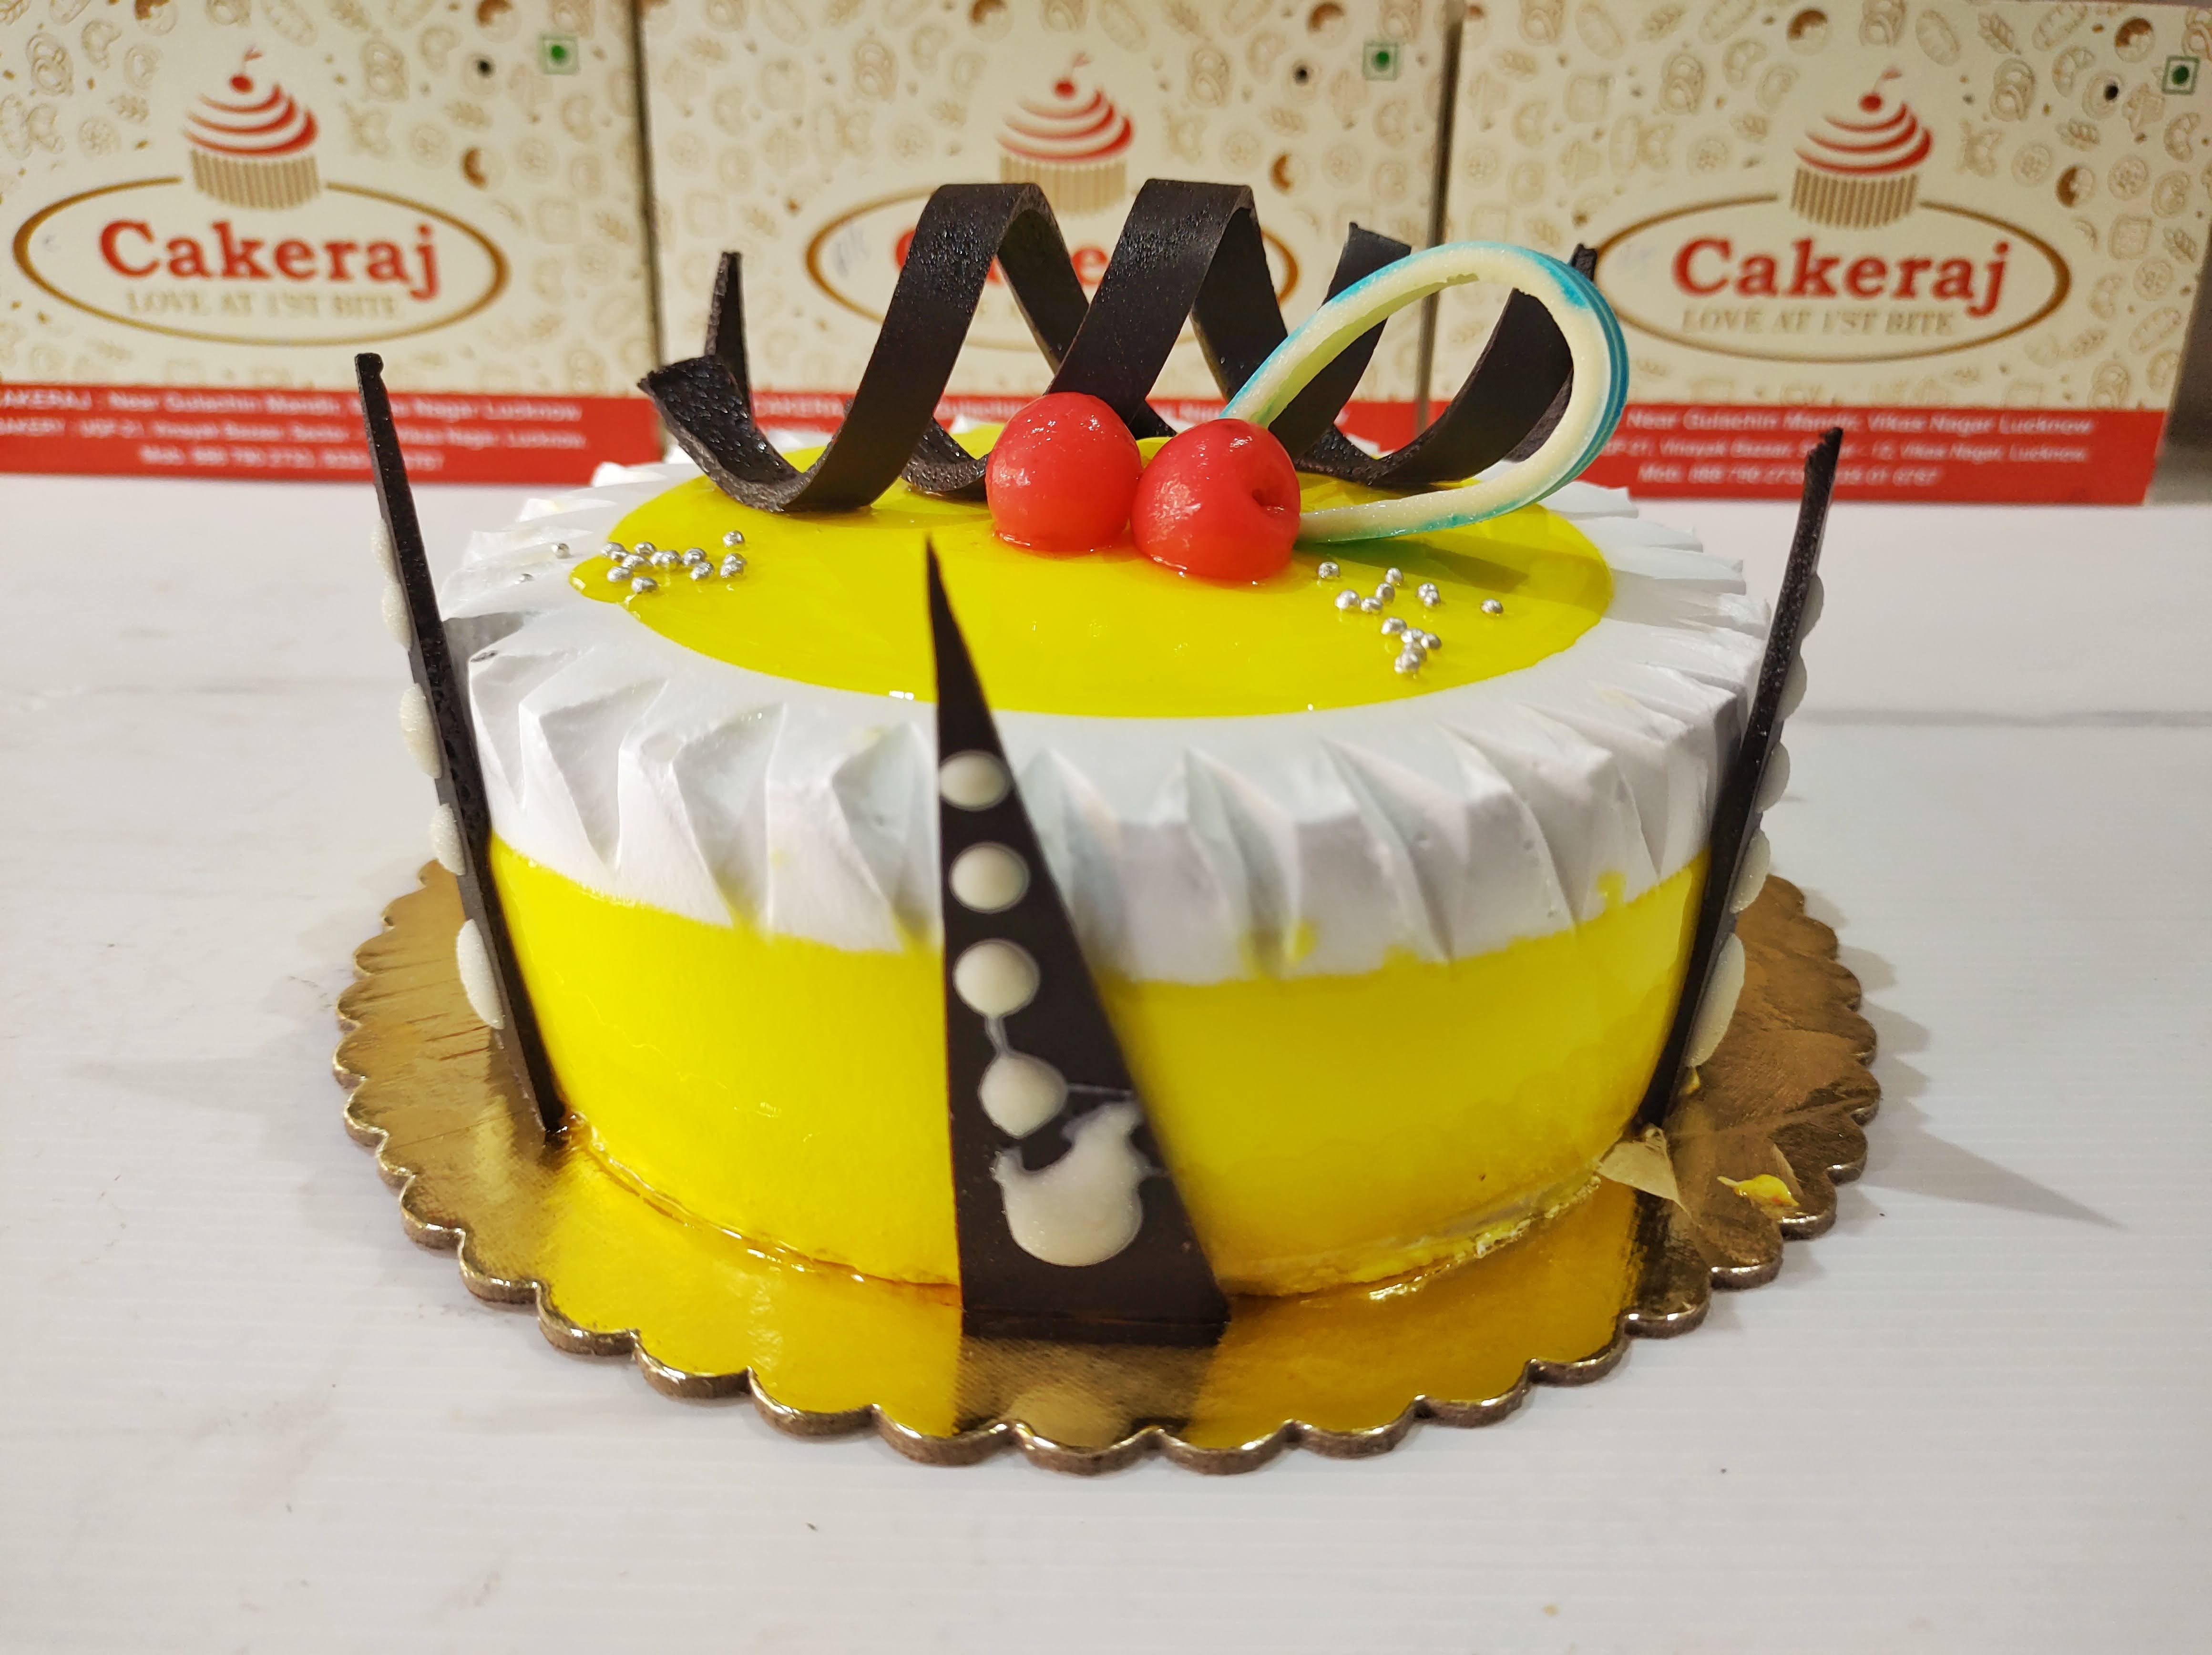 Cake Raj Bakery, Jopling Road, Lucknow | Zomato